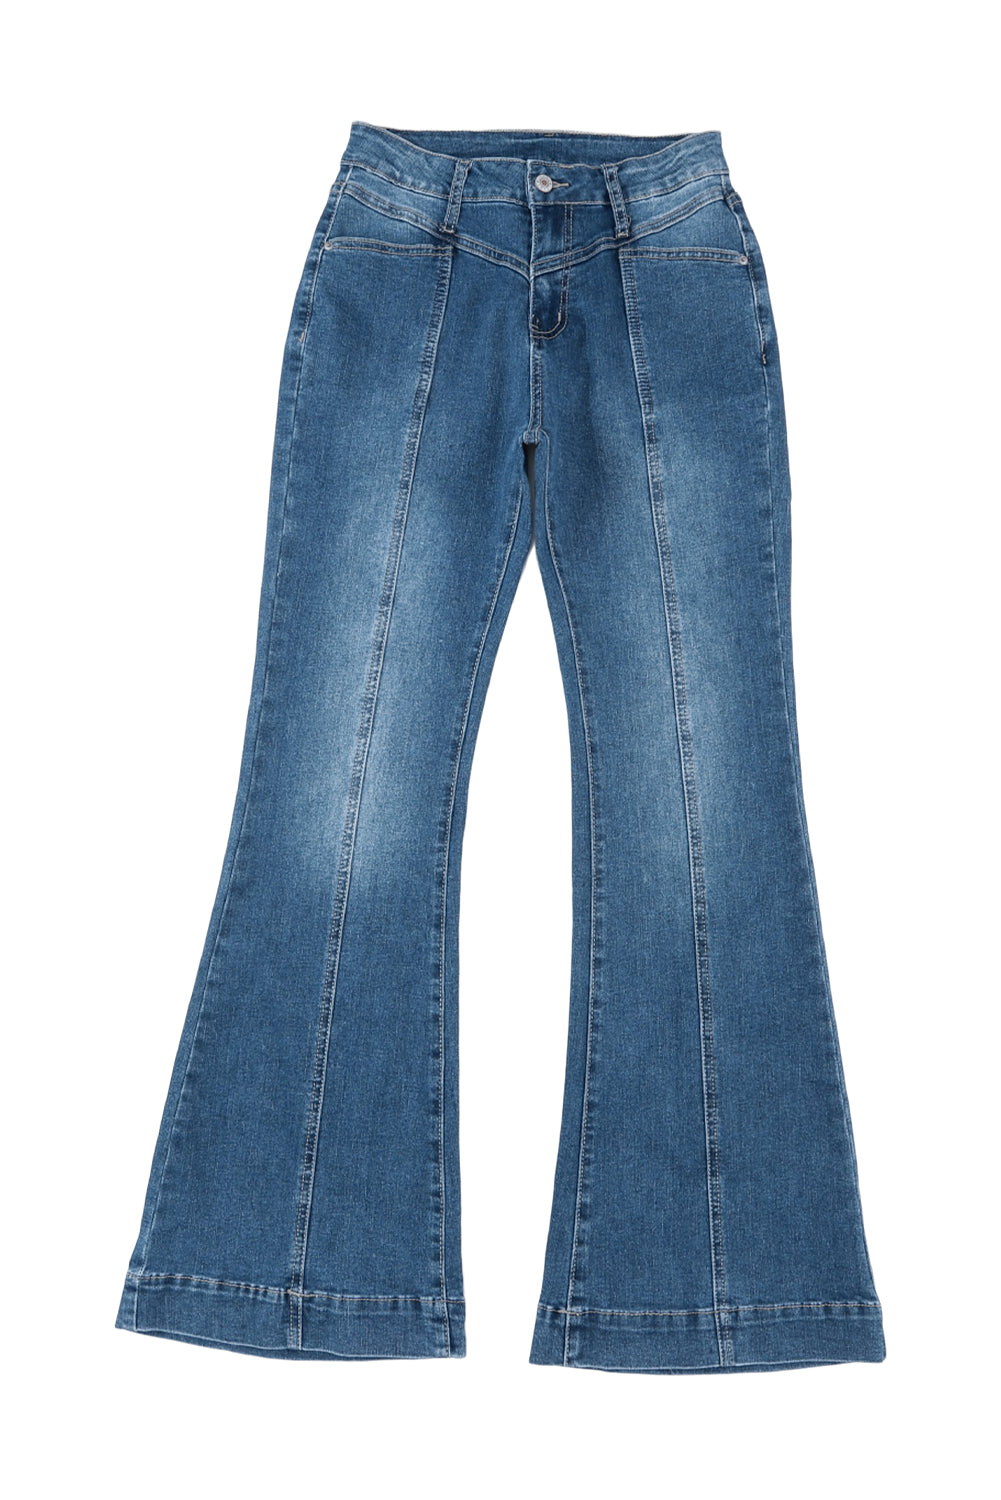 BMC♥️ Blue High Waist Flare Jeans